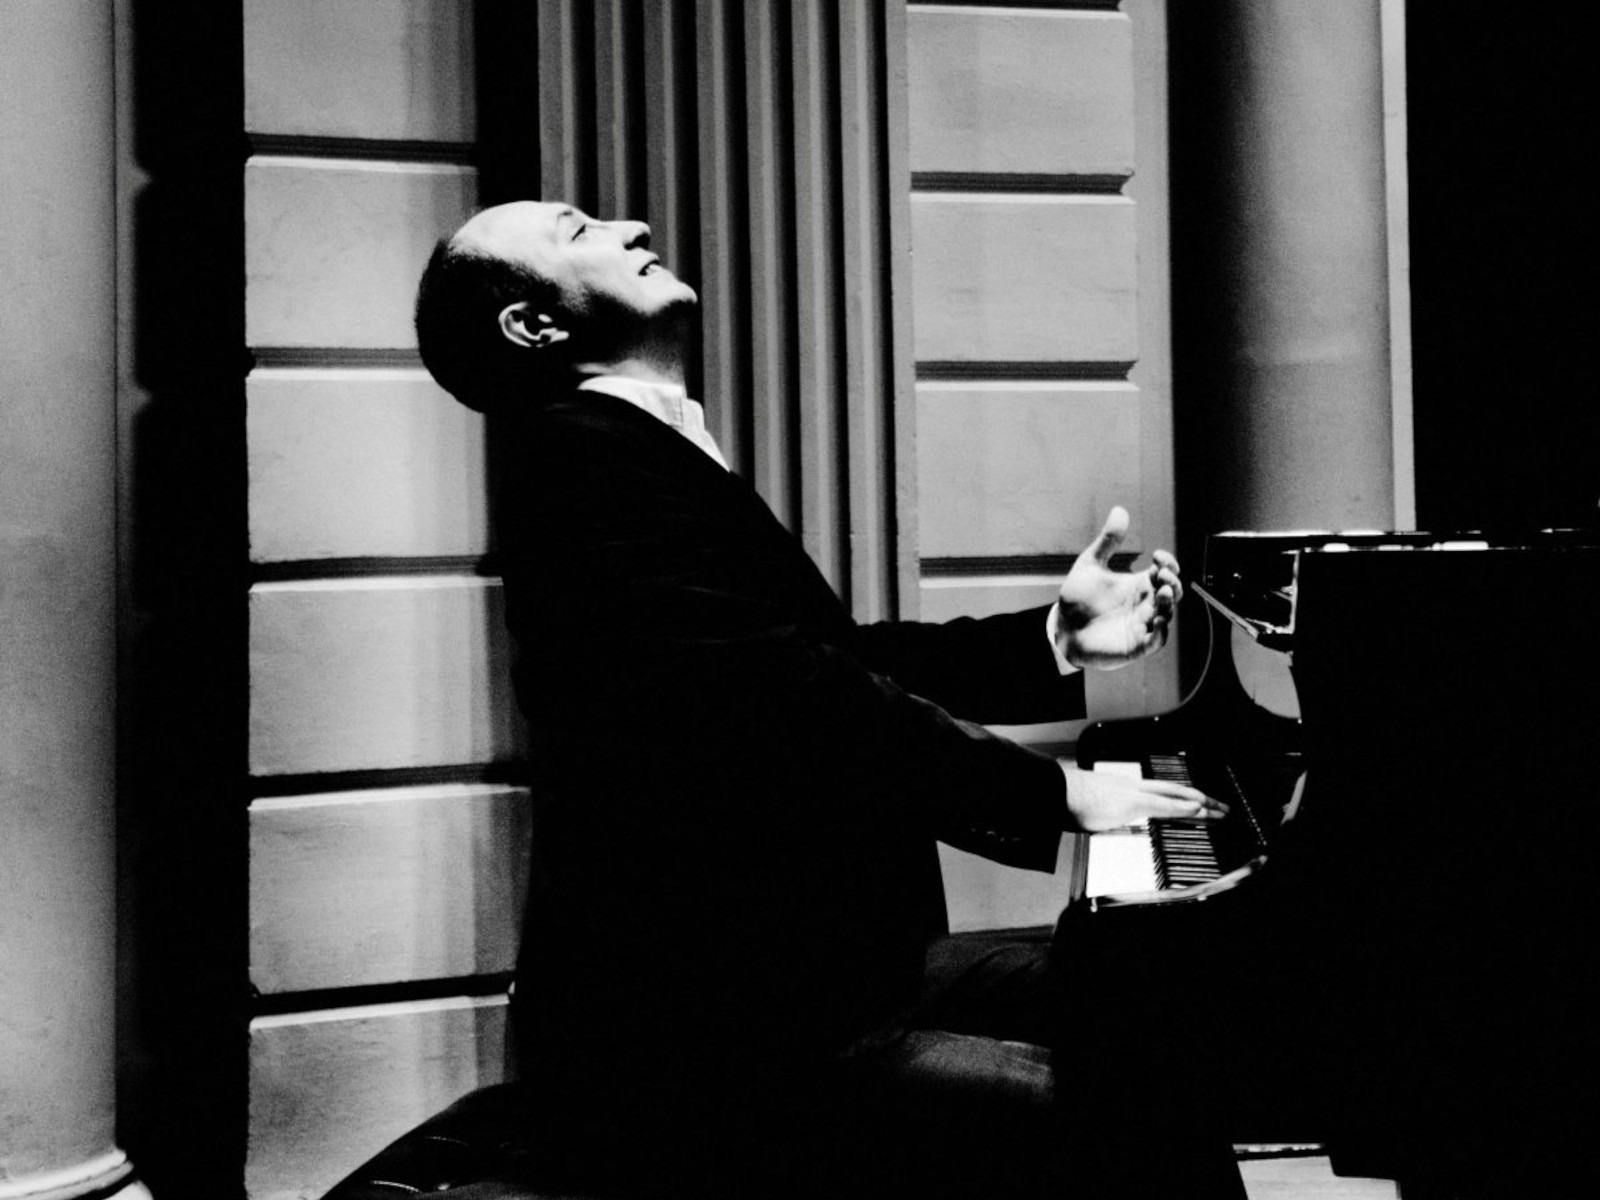 Monochrome image of a solo musician sitting at a piano.